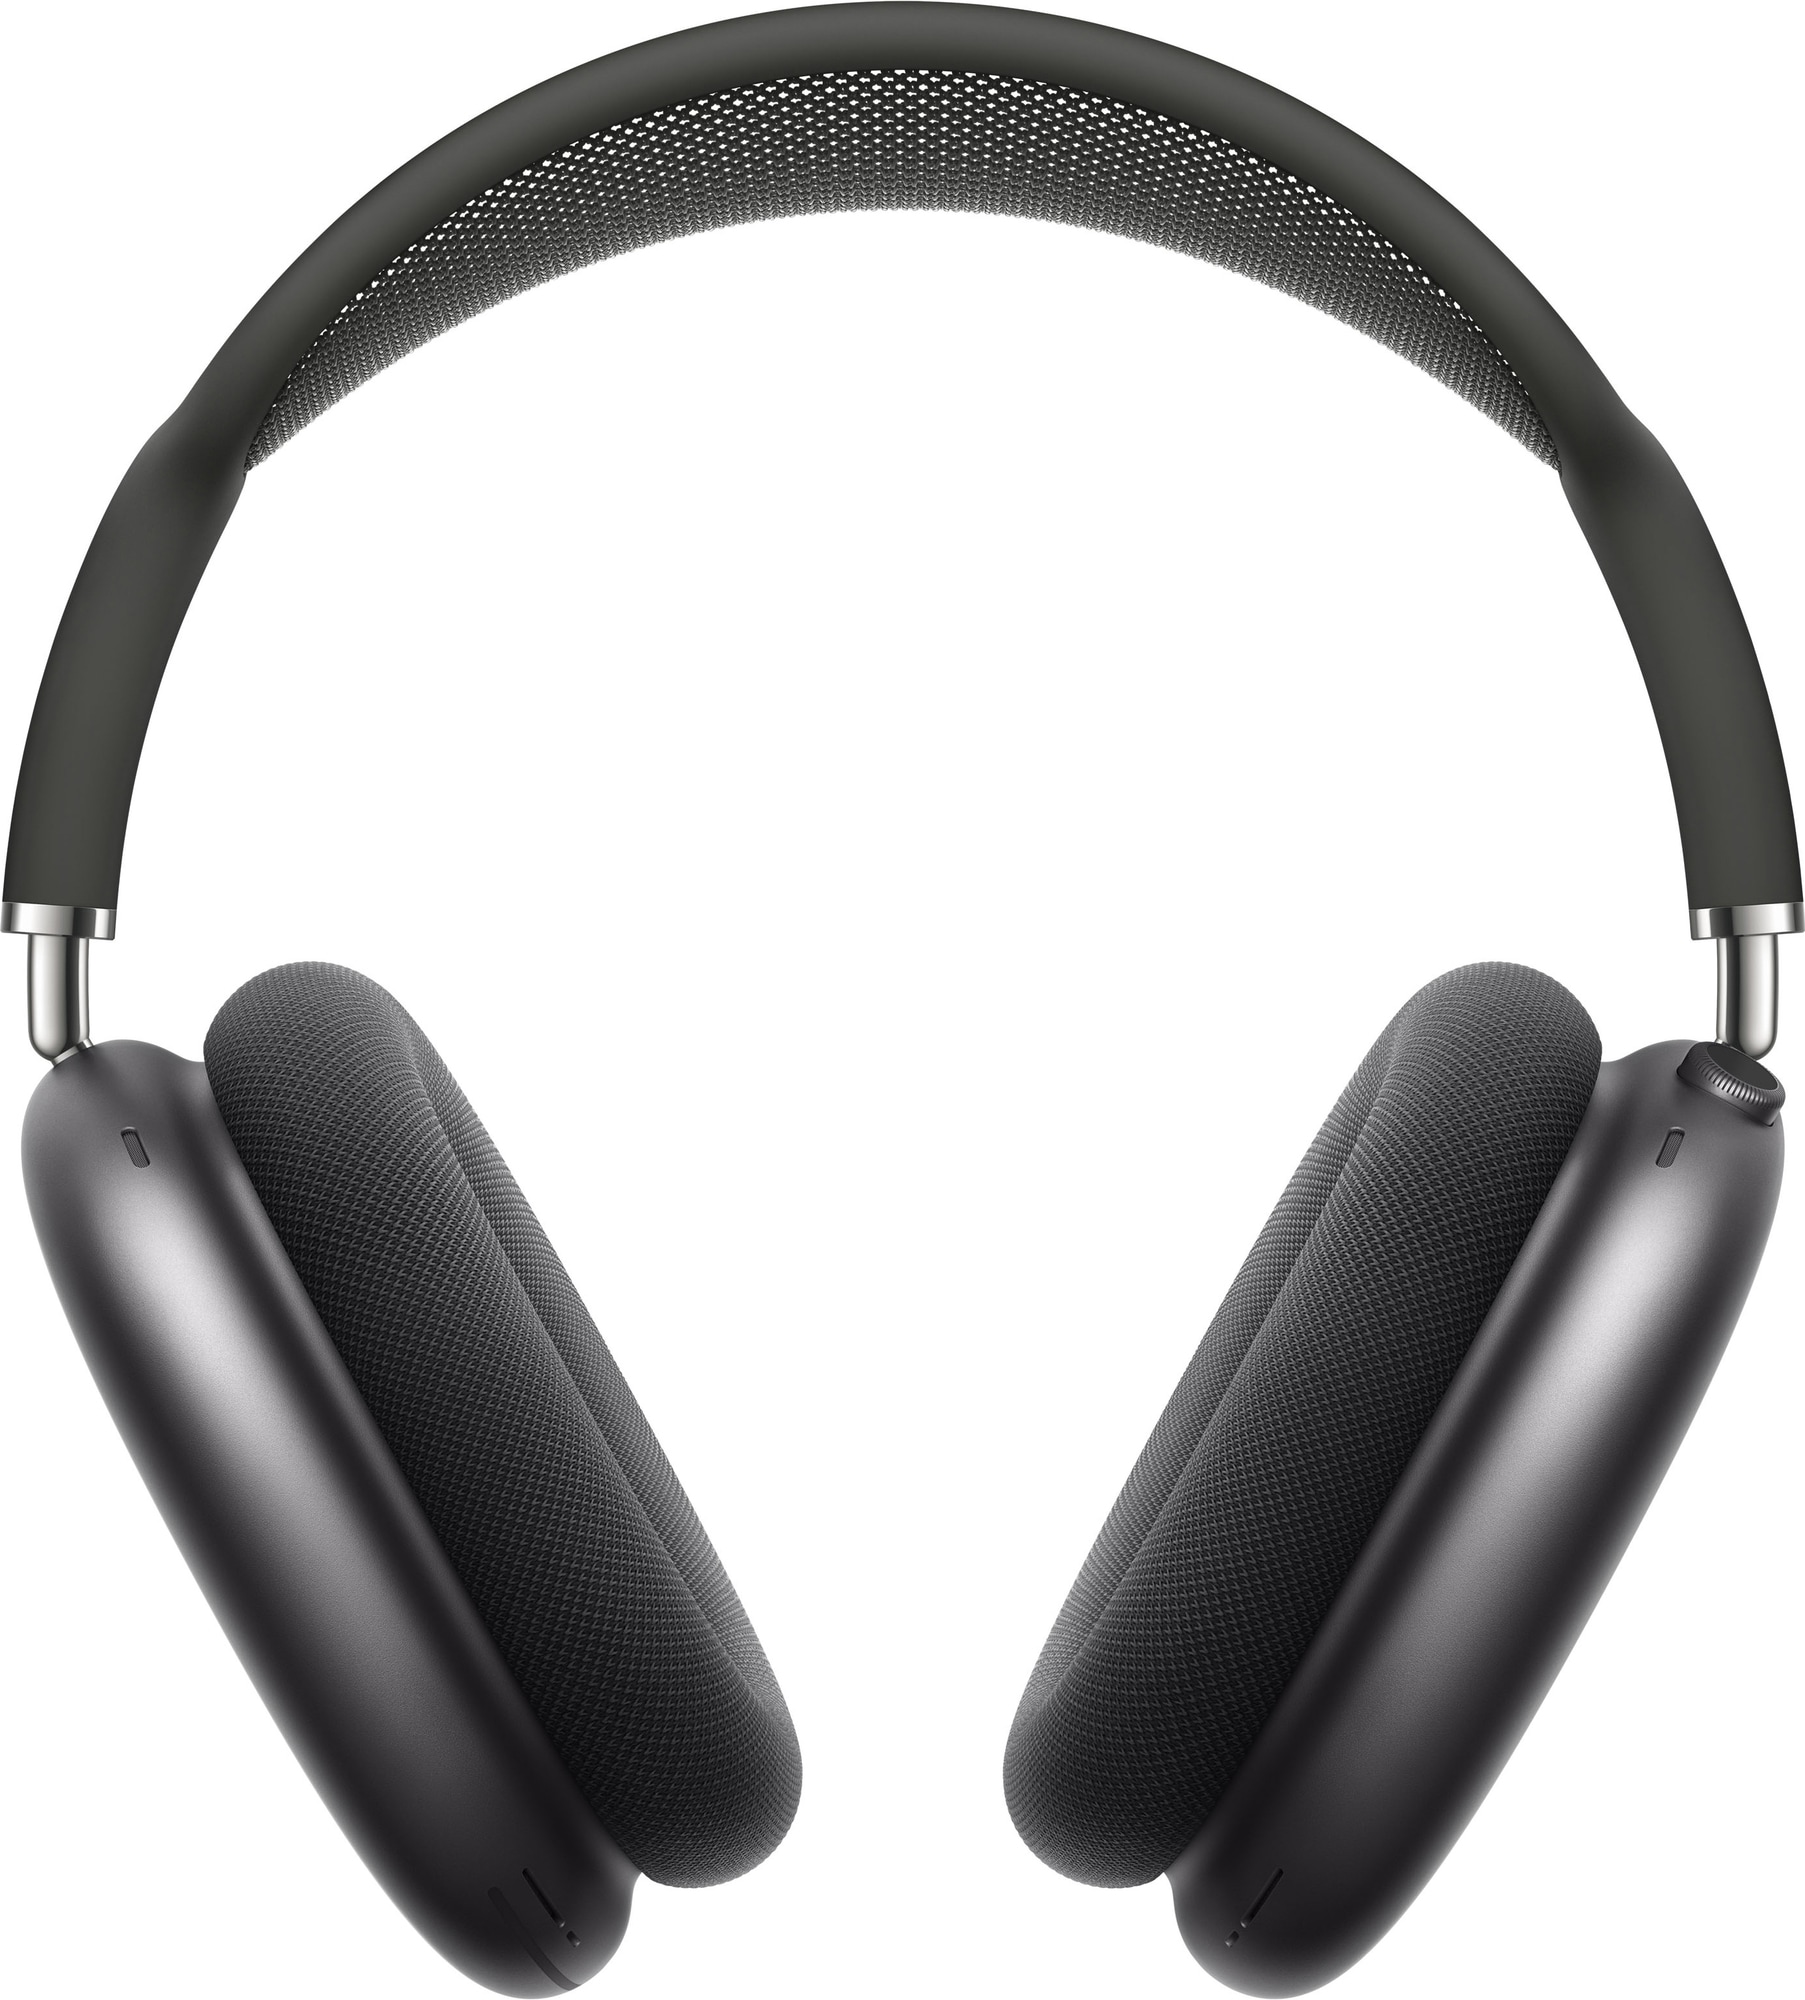 Brusreducerande hörlurar - noise-cancelling headphones - Elgiganten